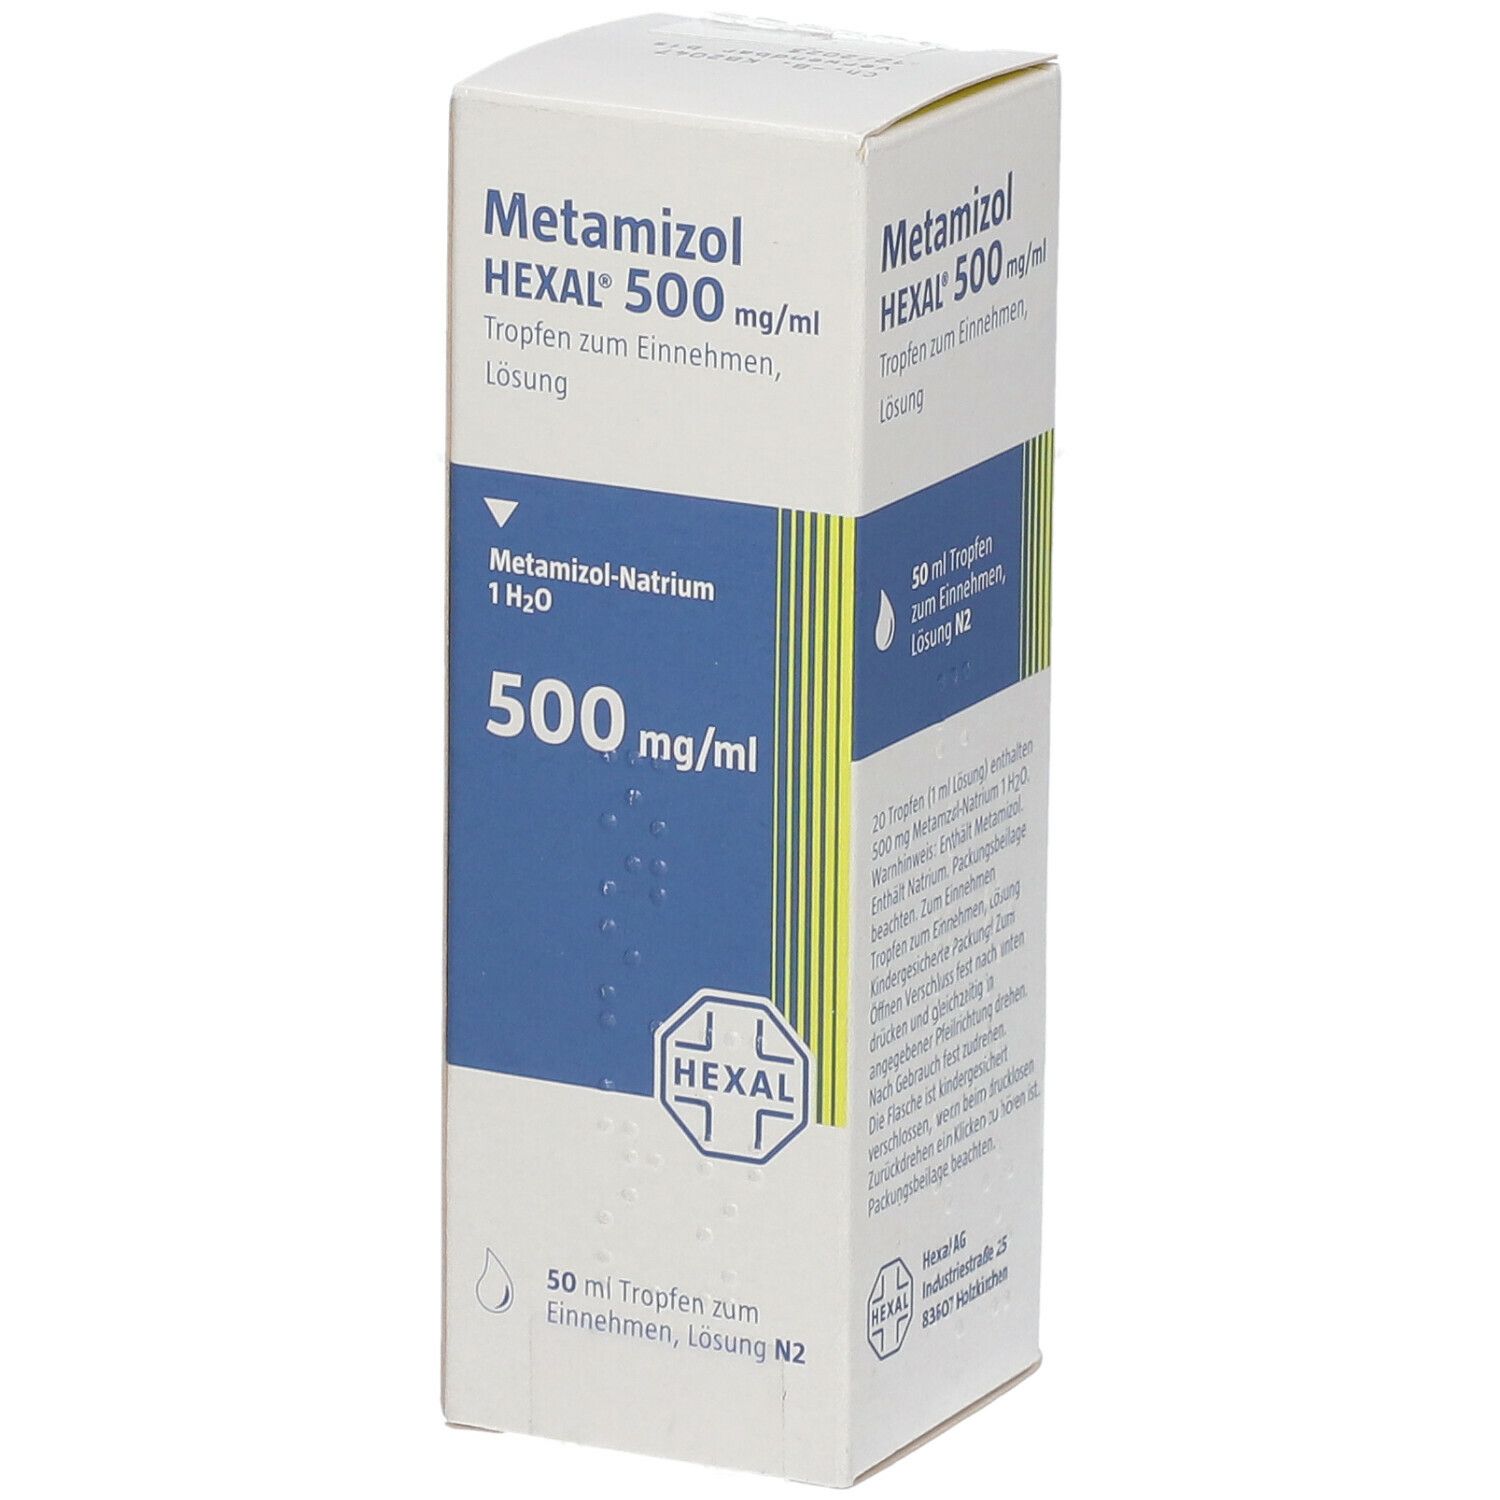 Metamizol HEXAL® 500 mg/ml